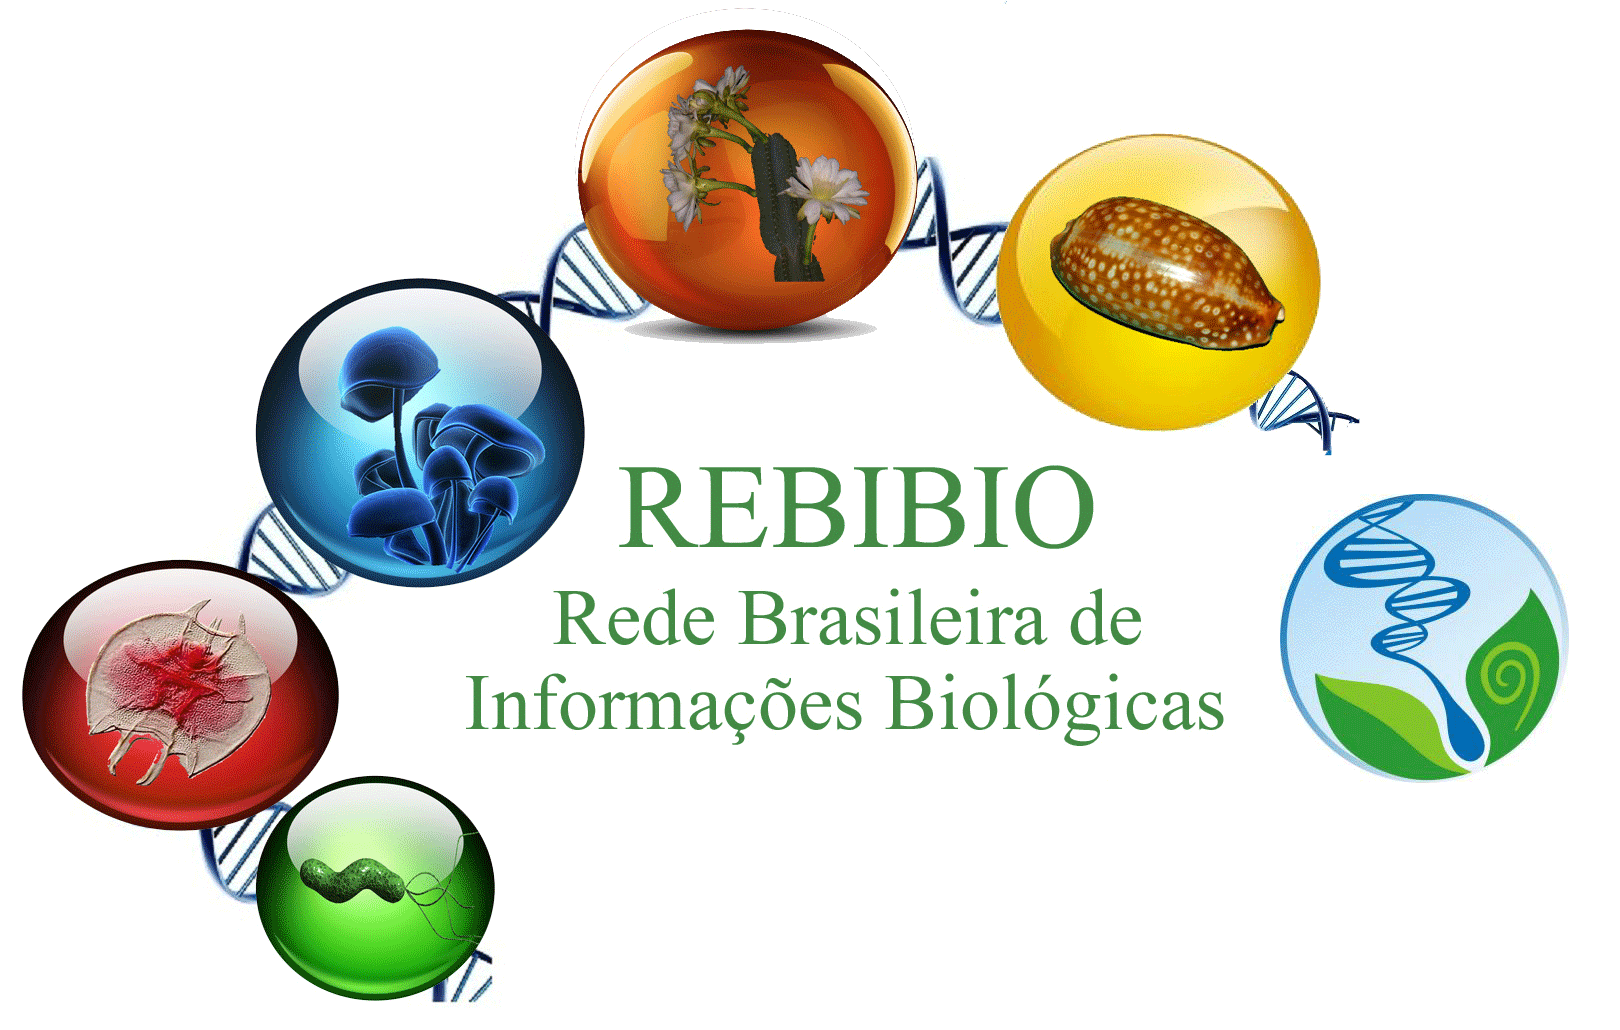 Rebibio - Rede Brasileira de Informacoes Biologicas